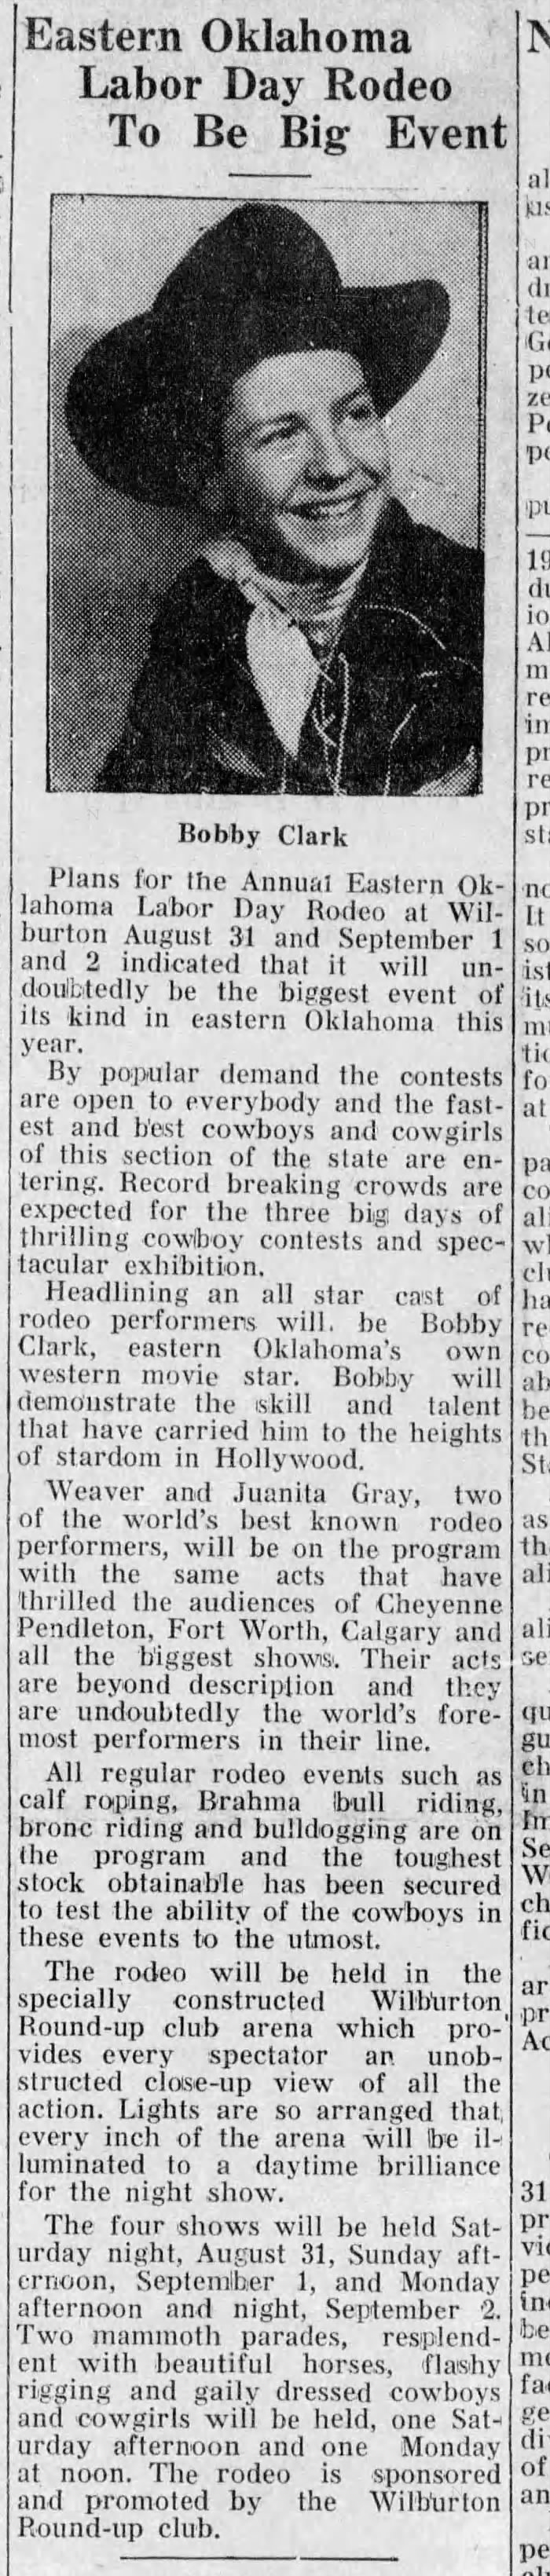 Bobby Clark at the 1940 Eastern Oklahoma Labor Day Rodeo.